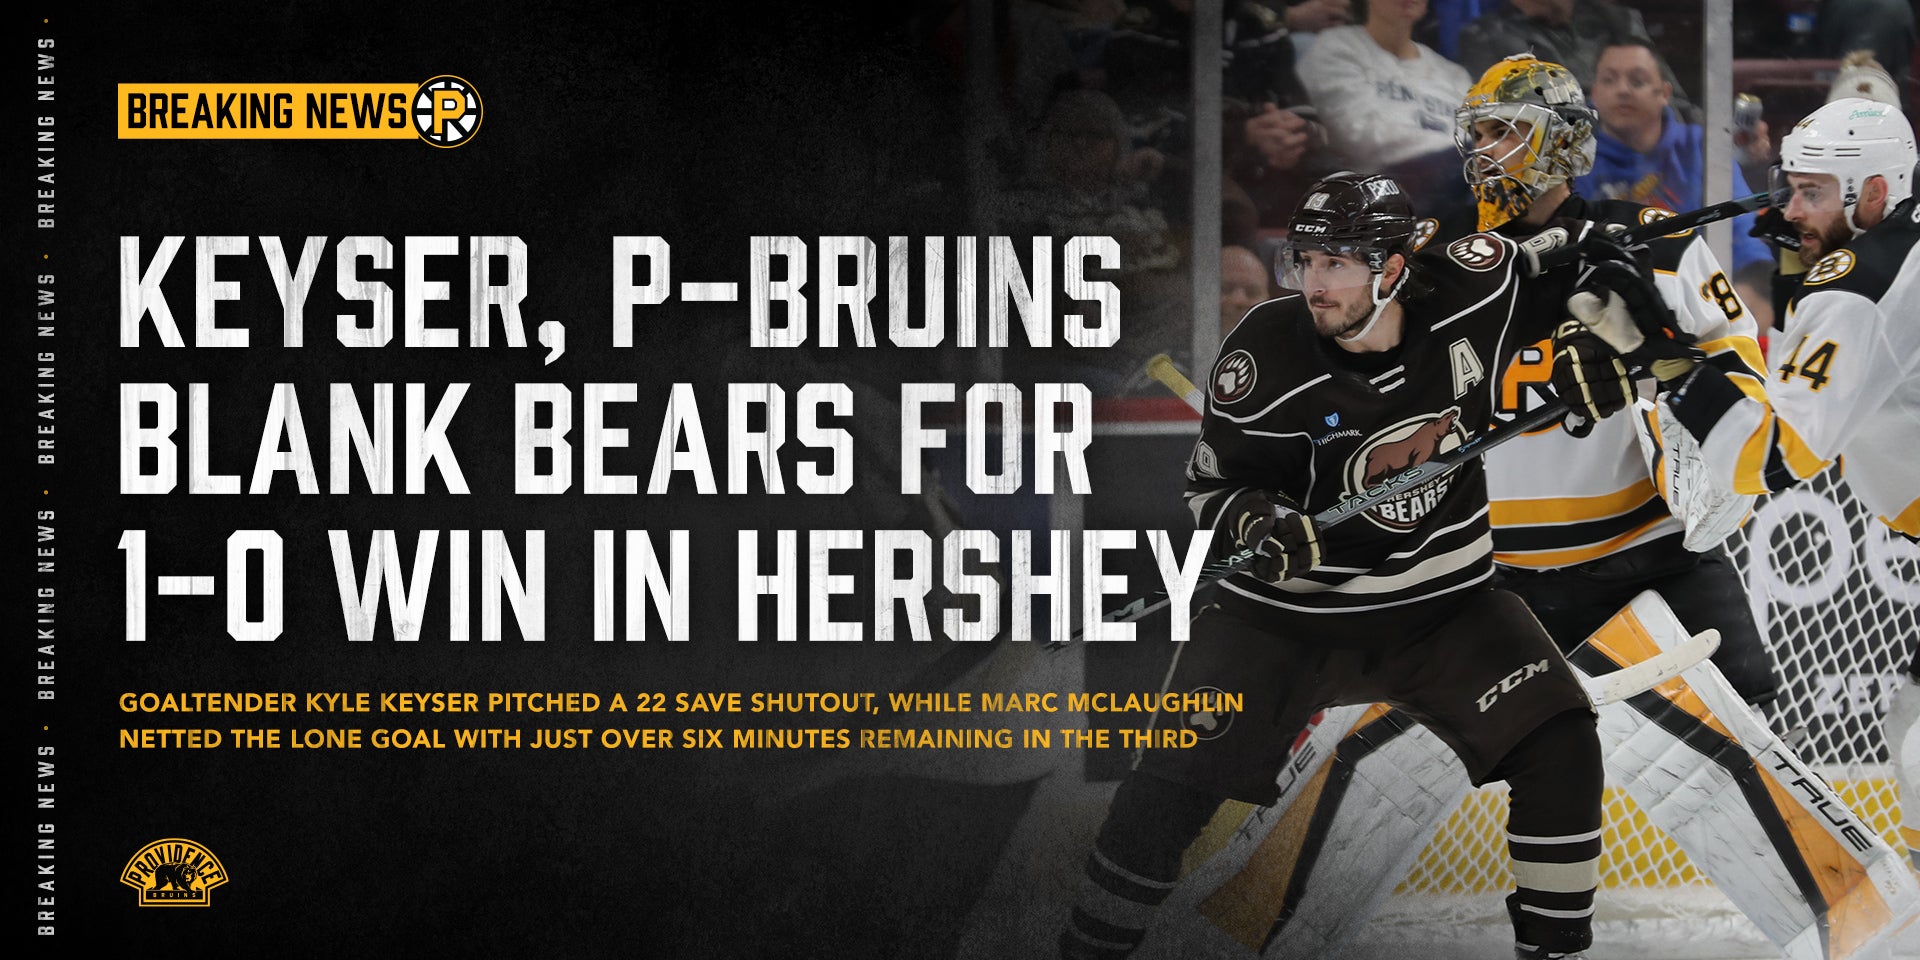 News  Providence Bruins